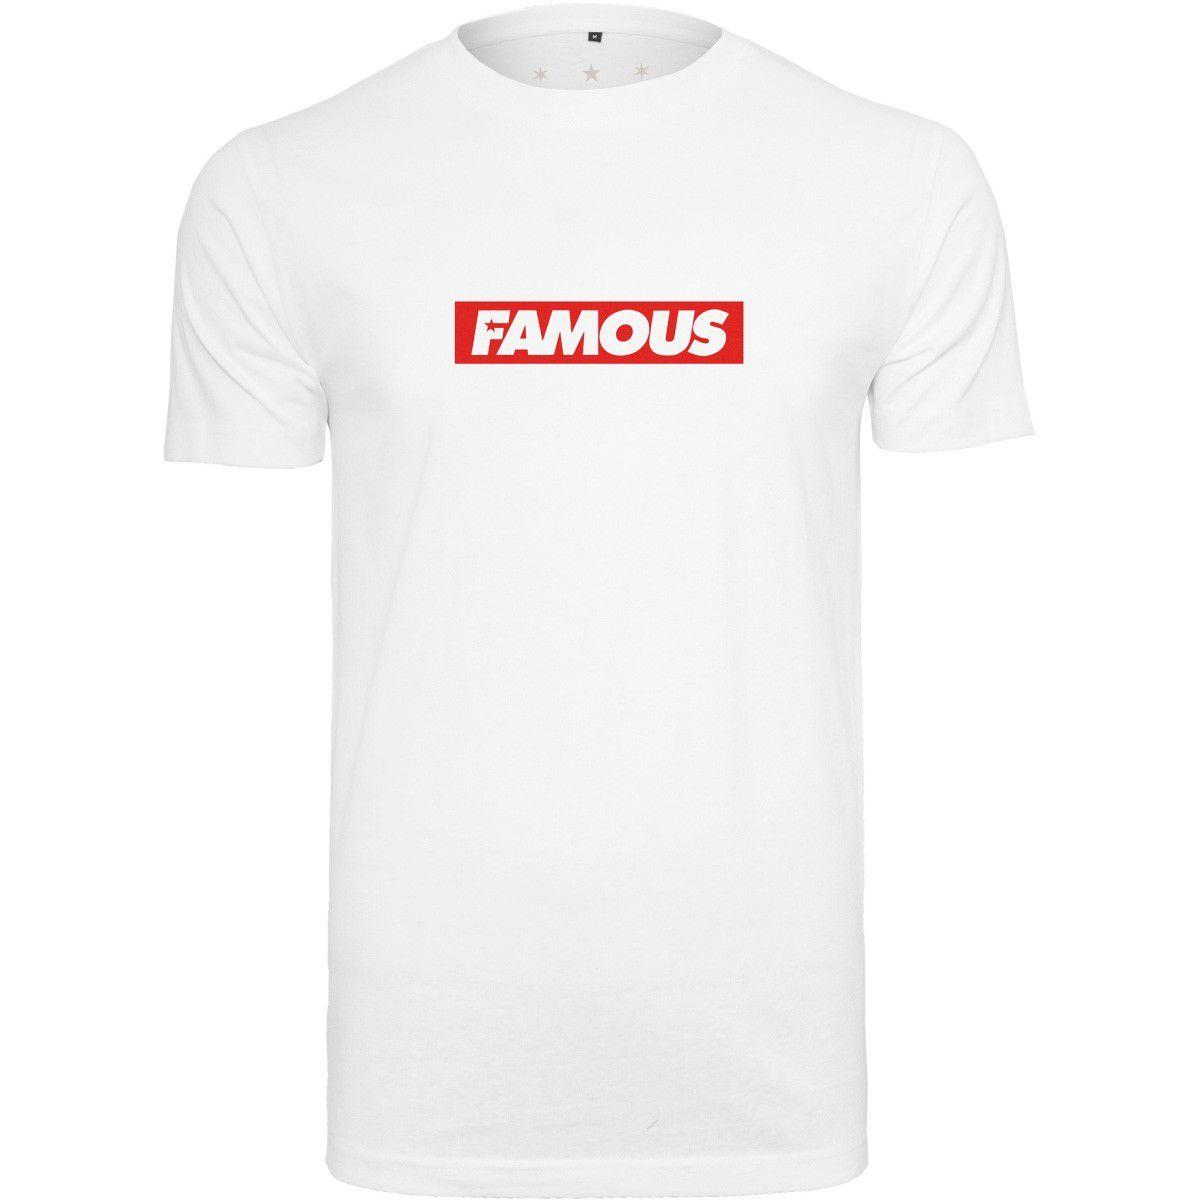 Famous White Box Logo - Buy Famous Stars and Straps Shirt - BOX LOGO white - Incl. shipping